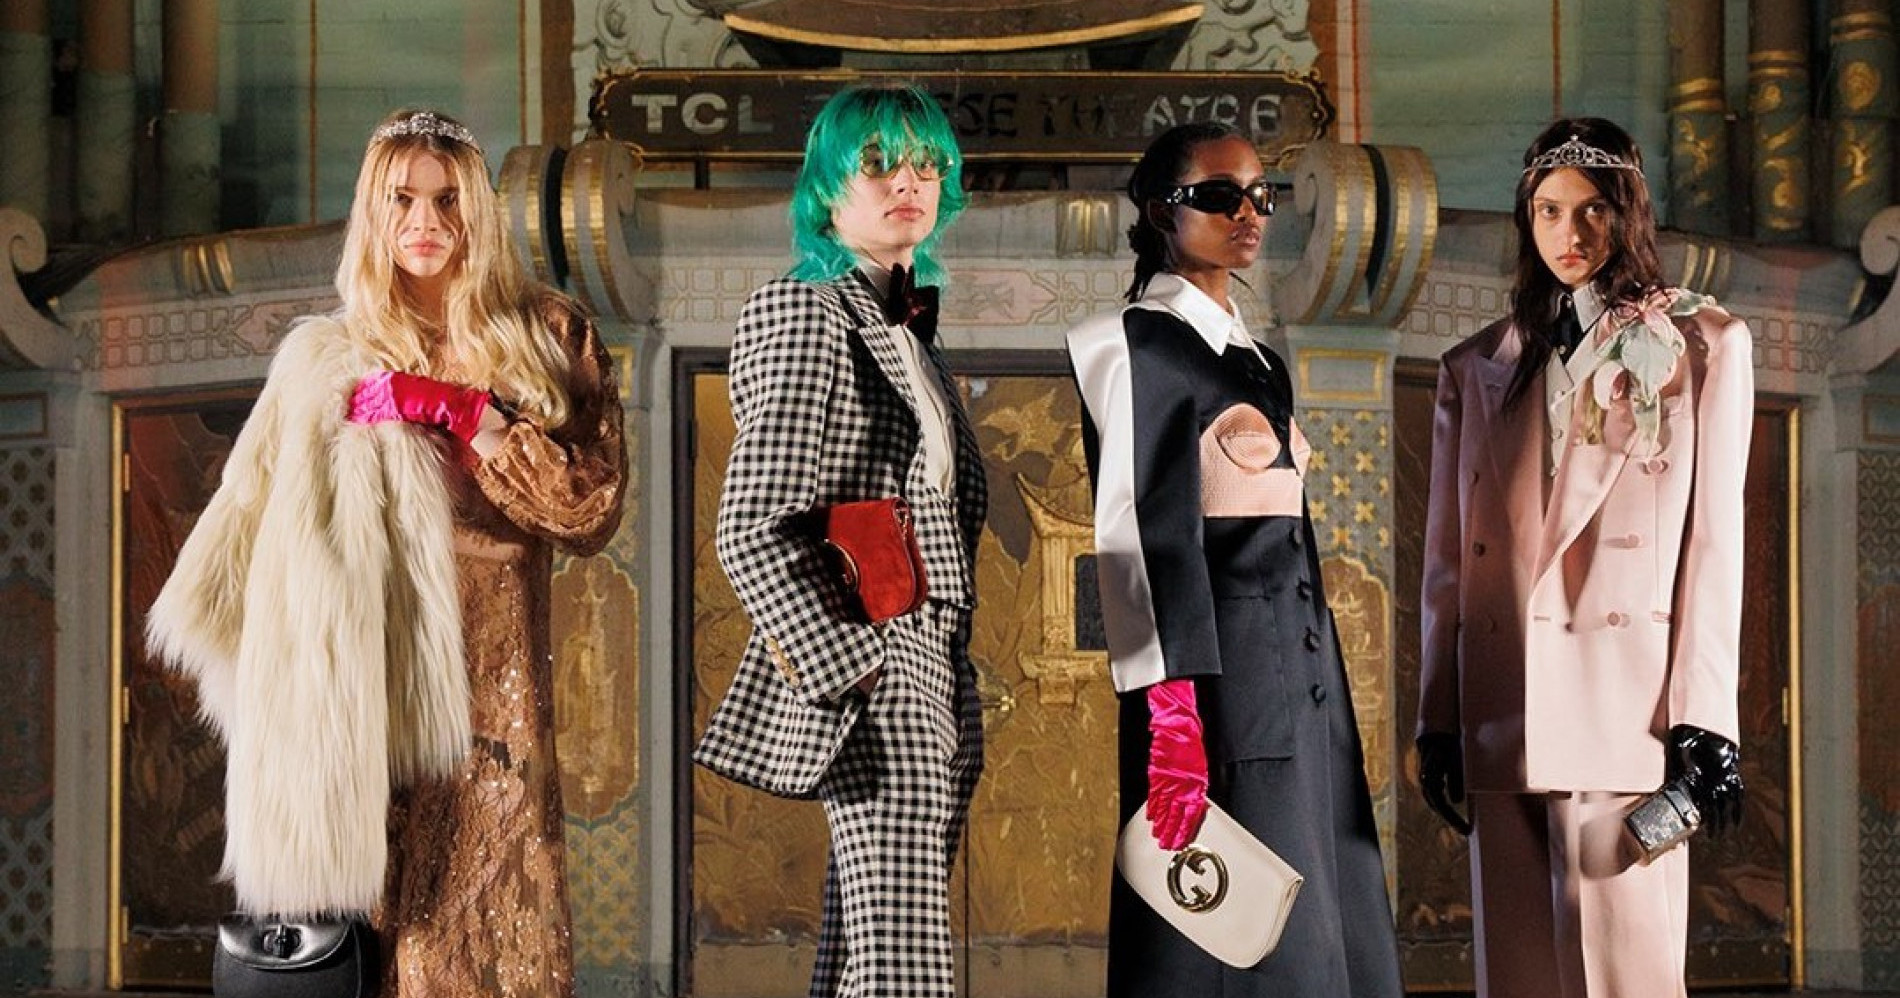 Cara Membedakan Brand Gucci Asli dan Palsu, Ini Ciri-cirinya -  Tribunsumsel.com